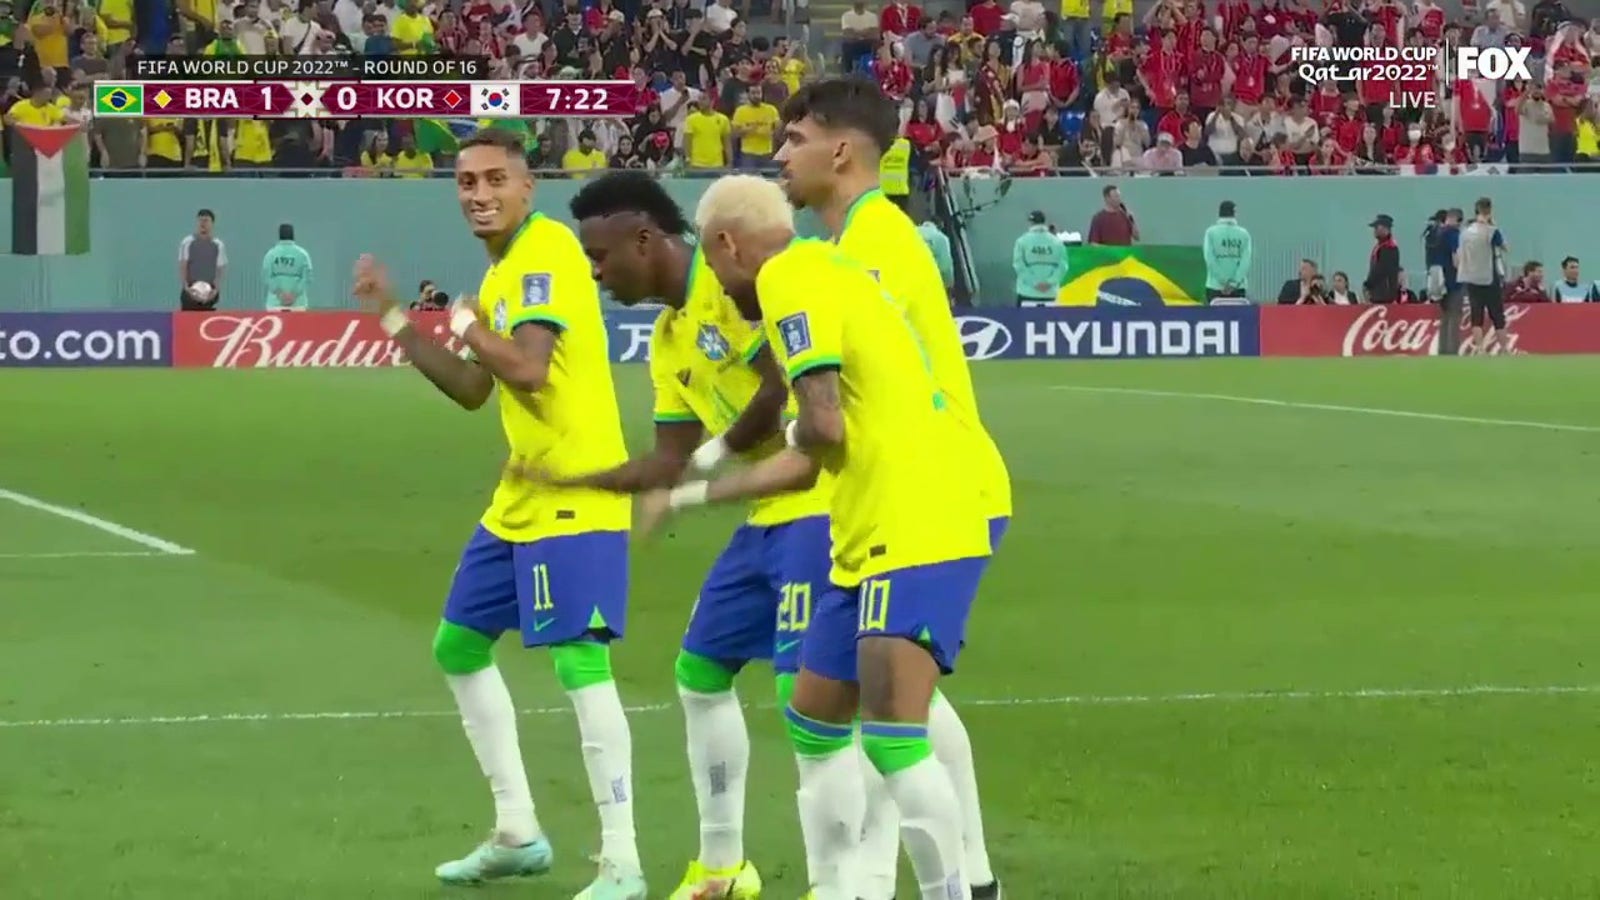 Brazil's Vinícius Júnior scores goal vs. Republic of Korea in 7'